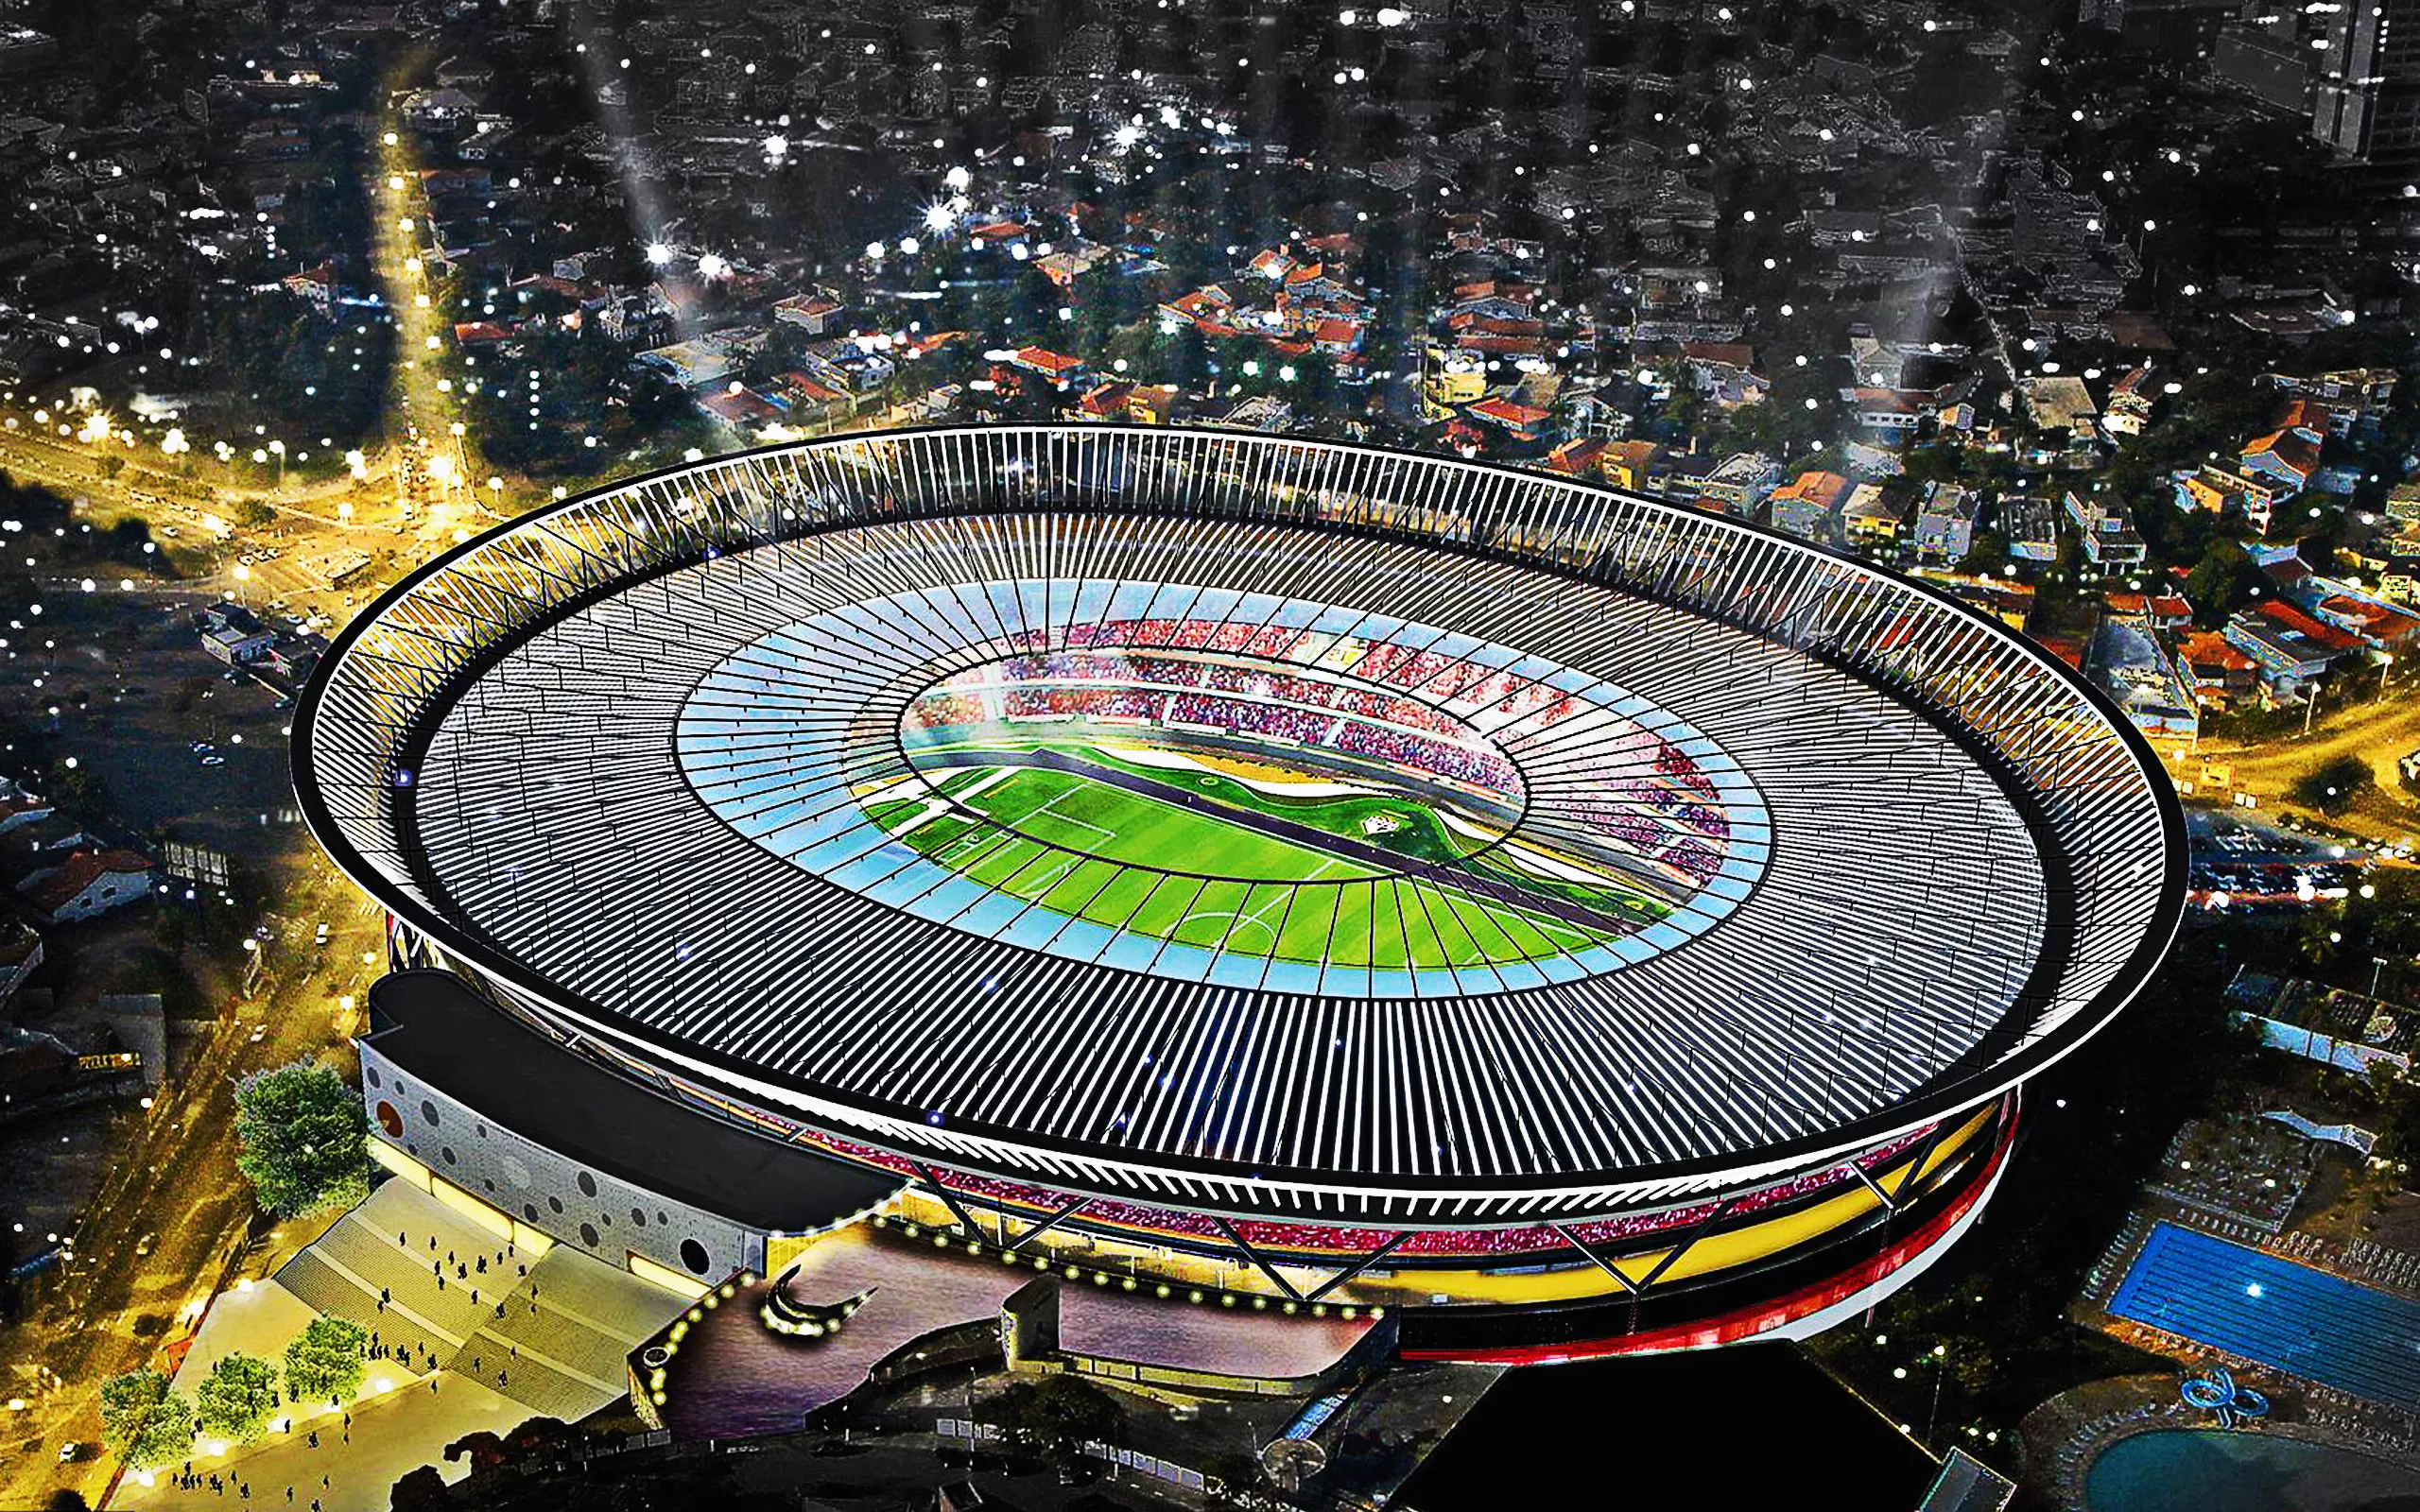 Estadio do Morumbi in Brazil, South America | Football - Rated 6